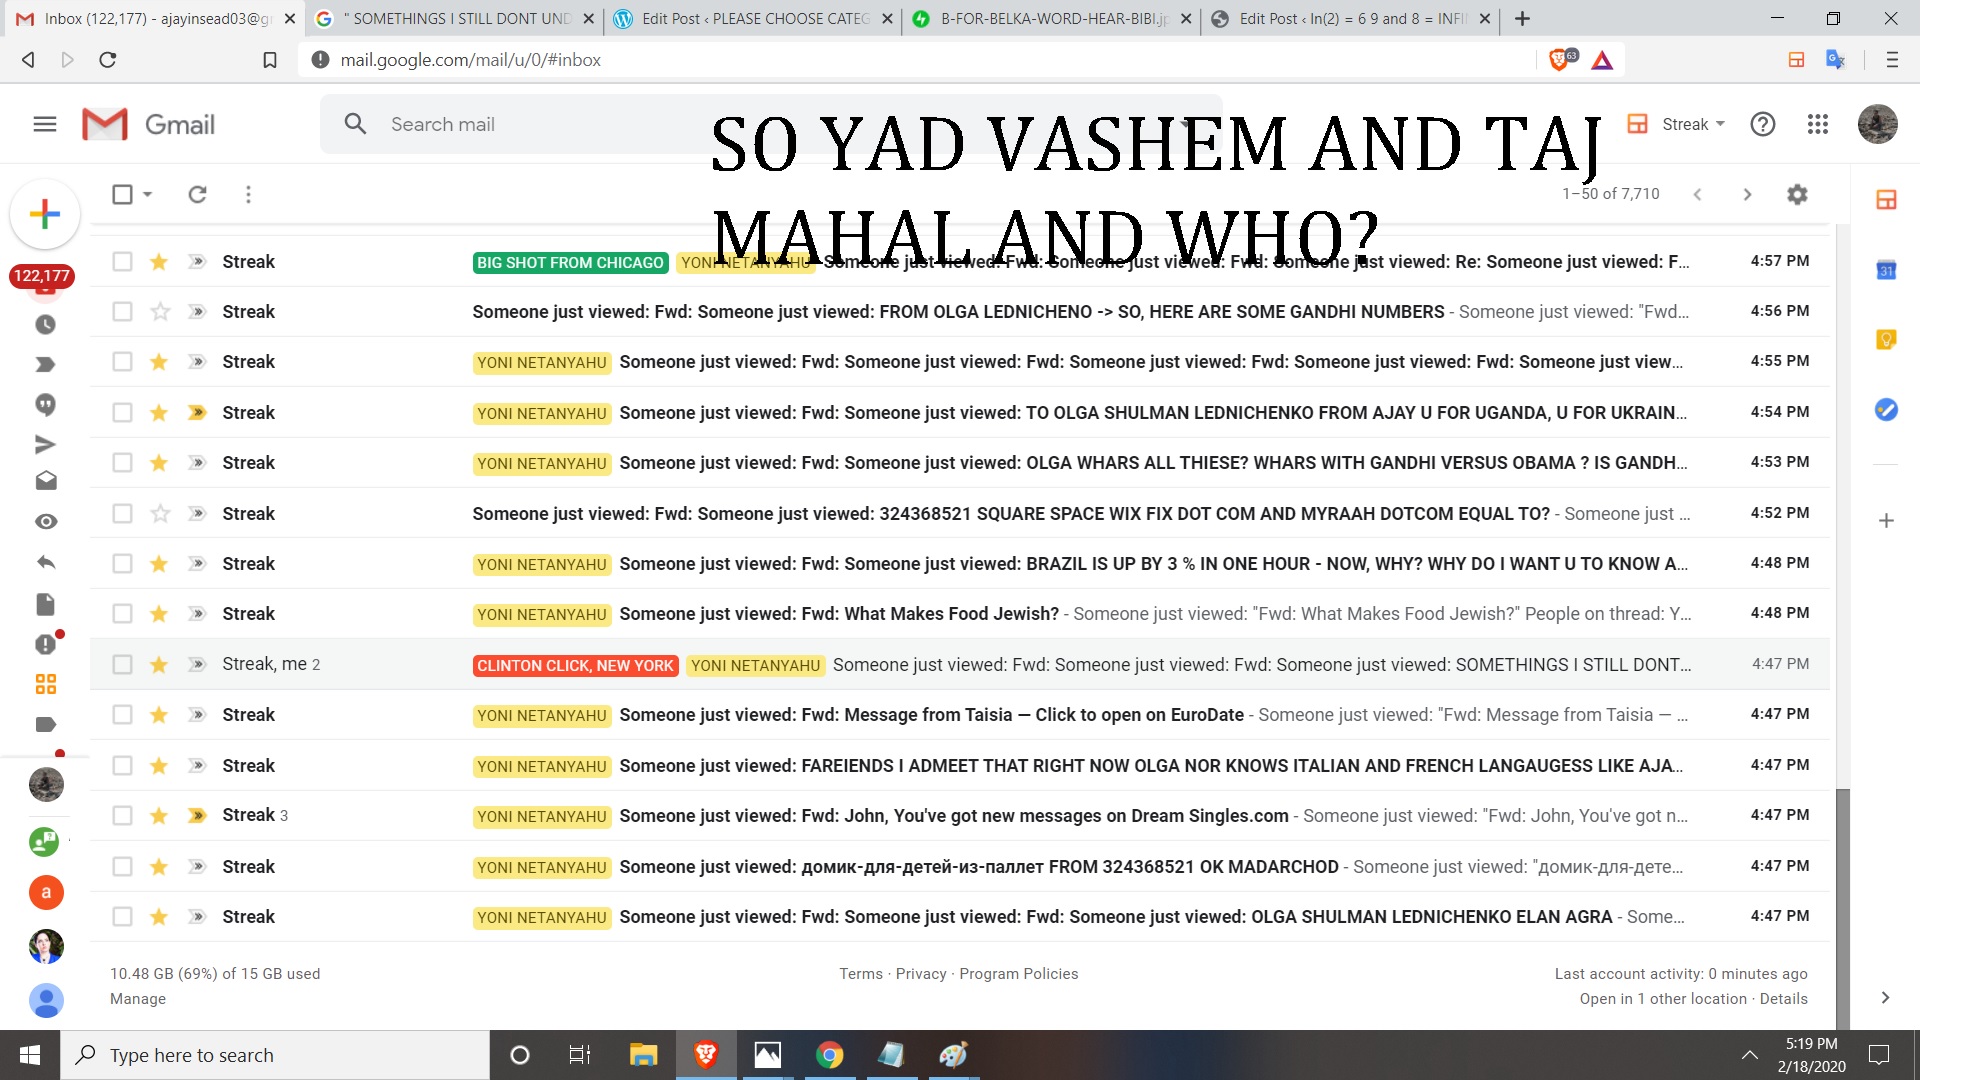 SO YAD VASHEM AND TAJ MAHAL IS WHO